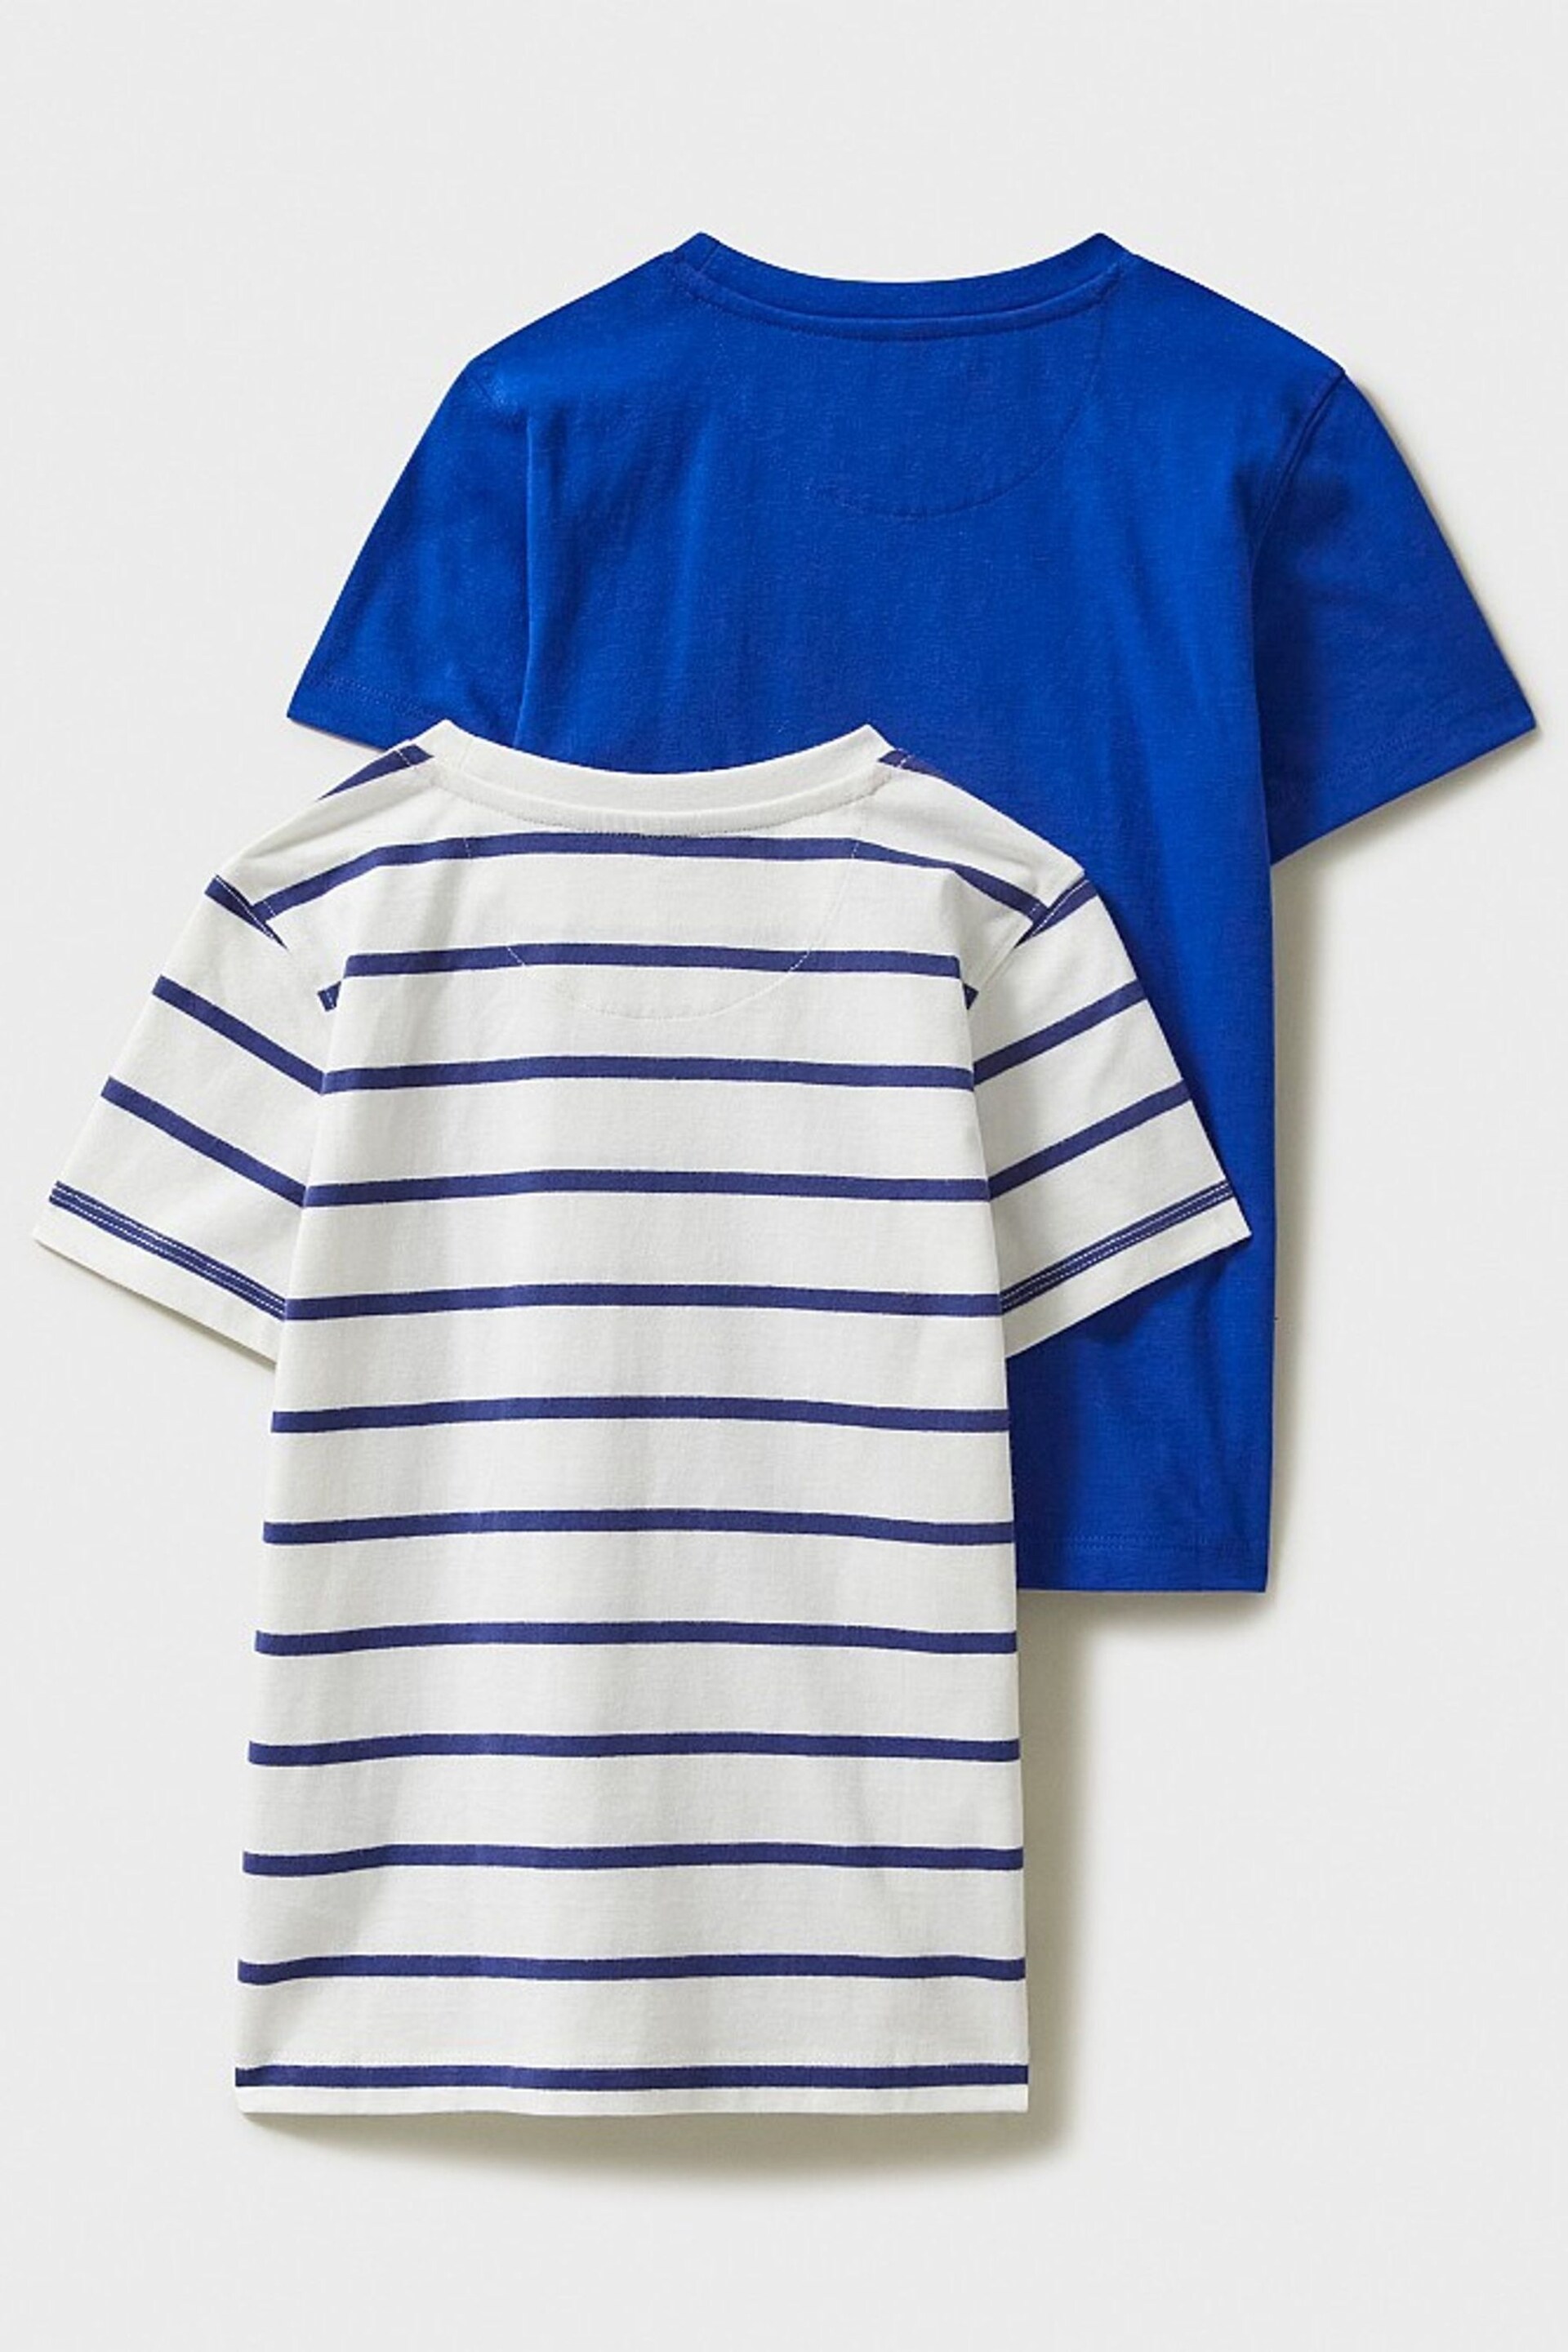 Crew Clothing Company Blue Stripe Cotton Classic T-Shirt 2 PK - Image 2 of 5